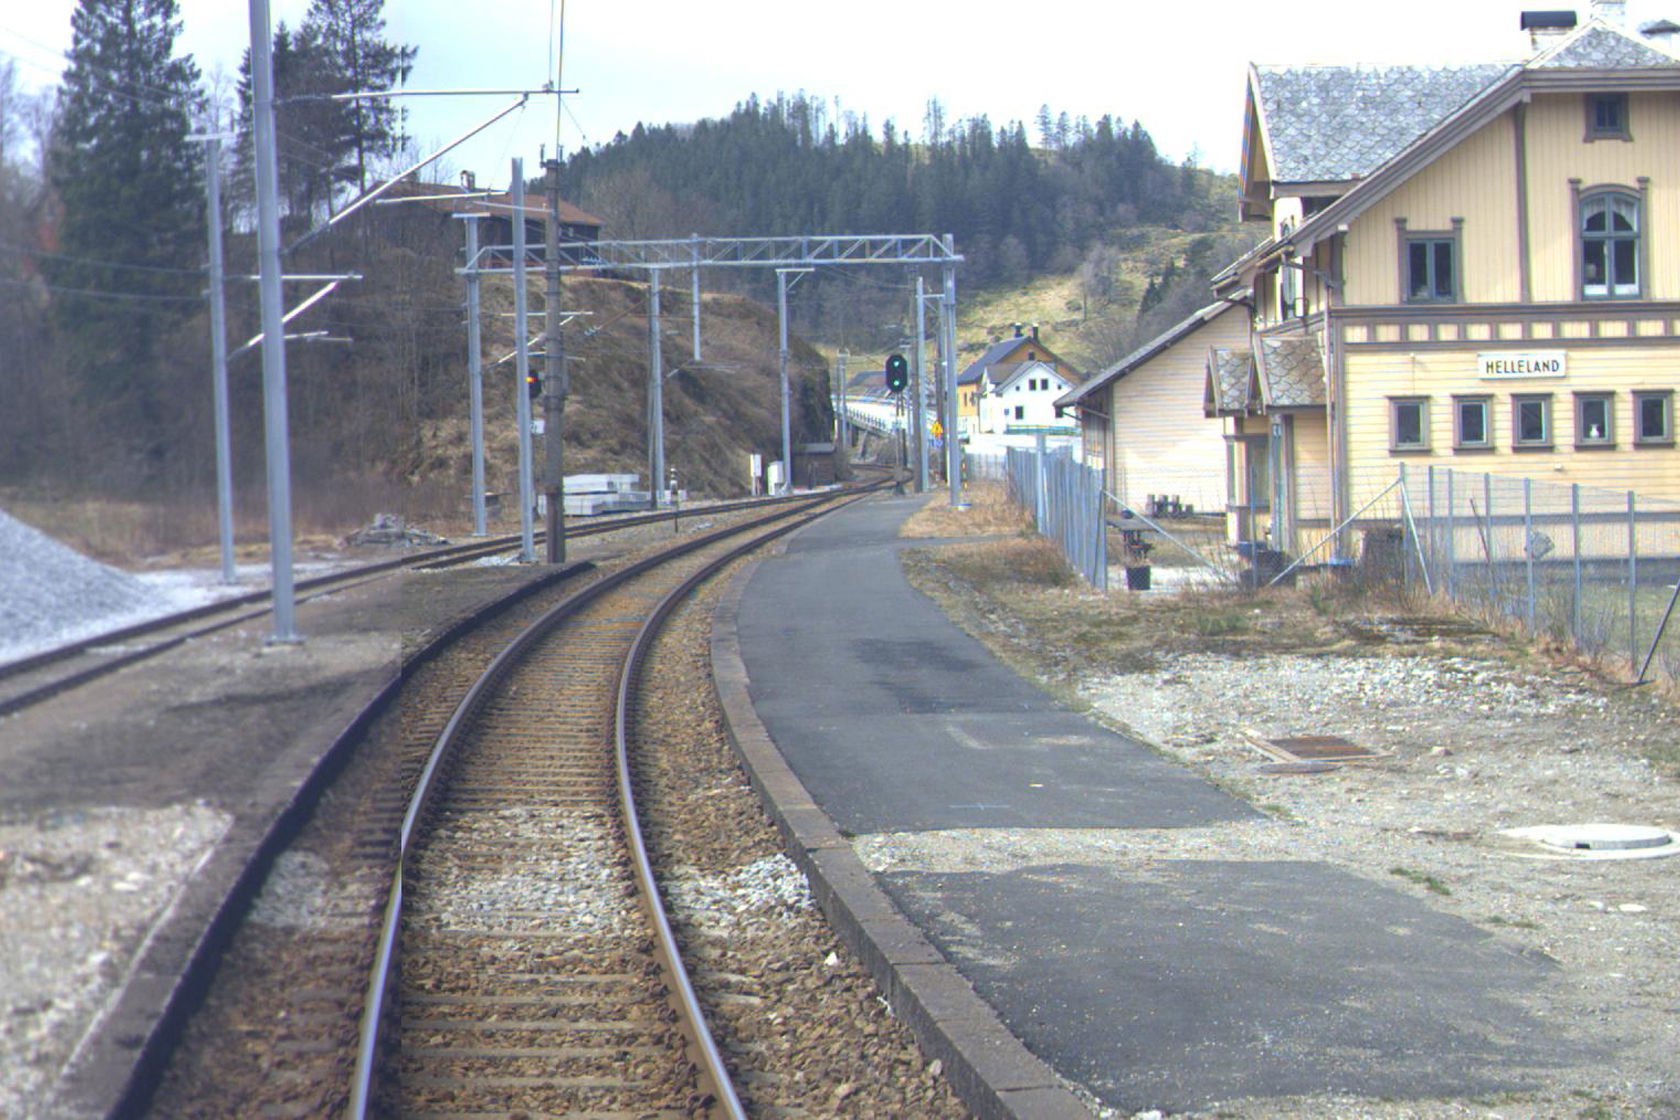 Tracks and station building at Helleland station